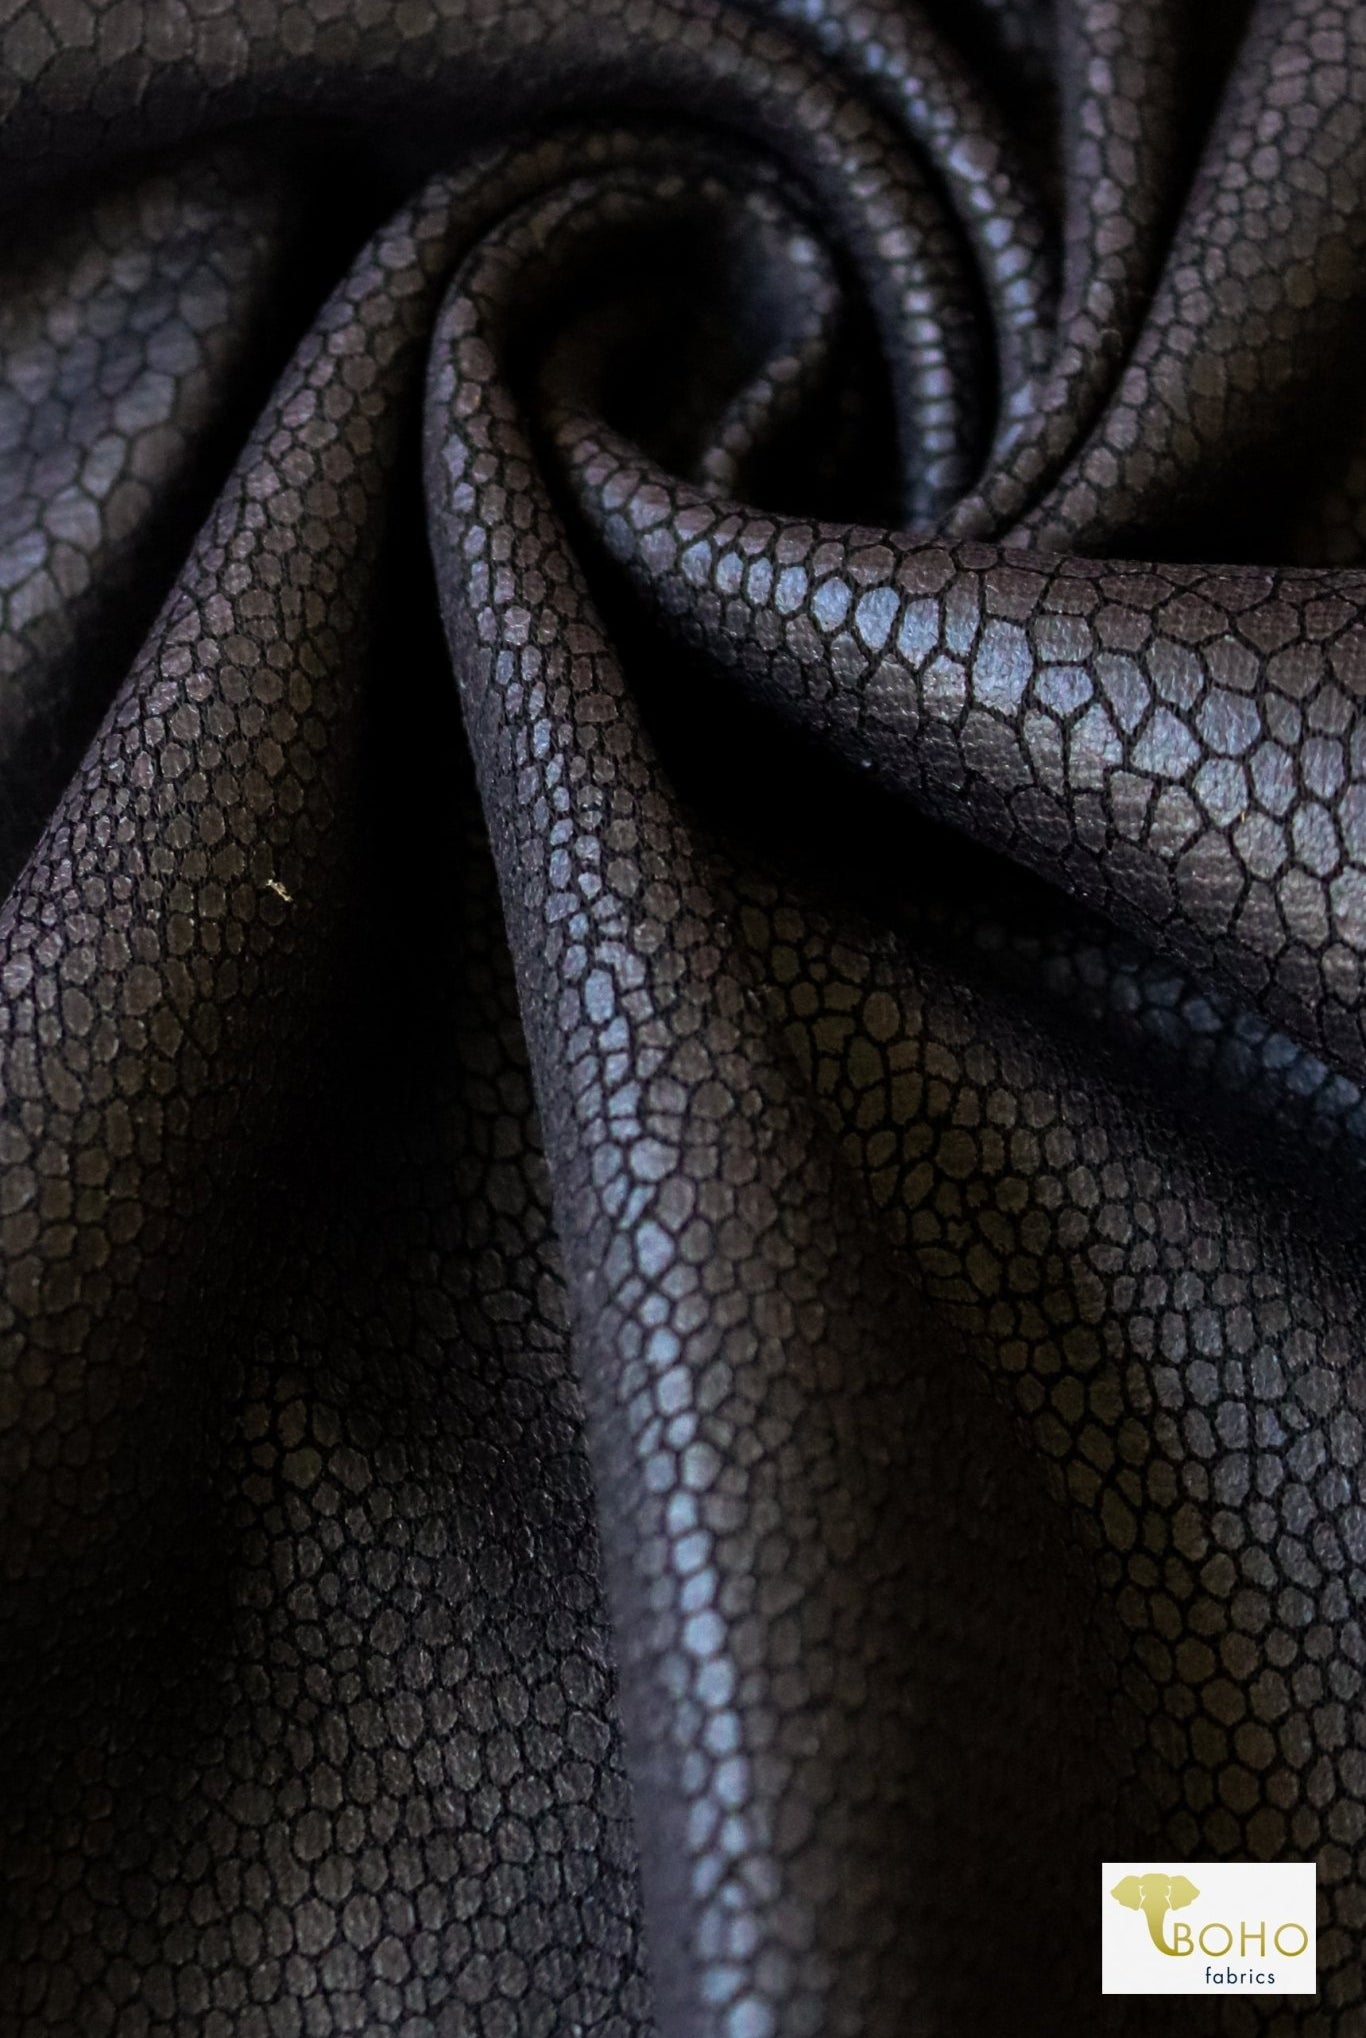 LAST CUTS! Black Dragonscale, Ponte Print, Double Knit - Boho Fabrics - Ponte Print, Knit Fabric